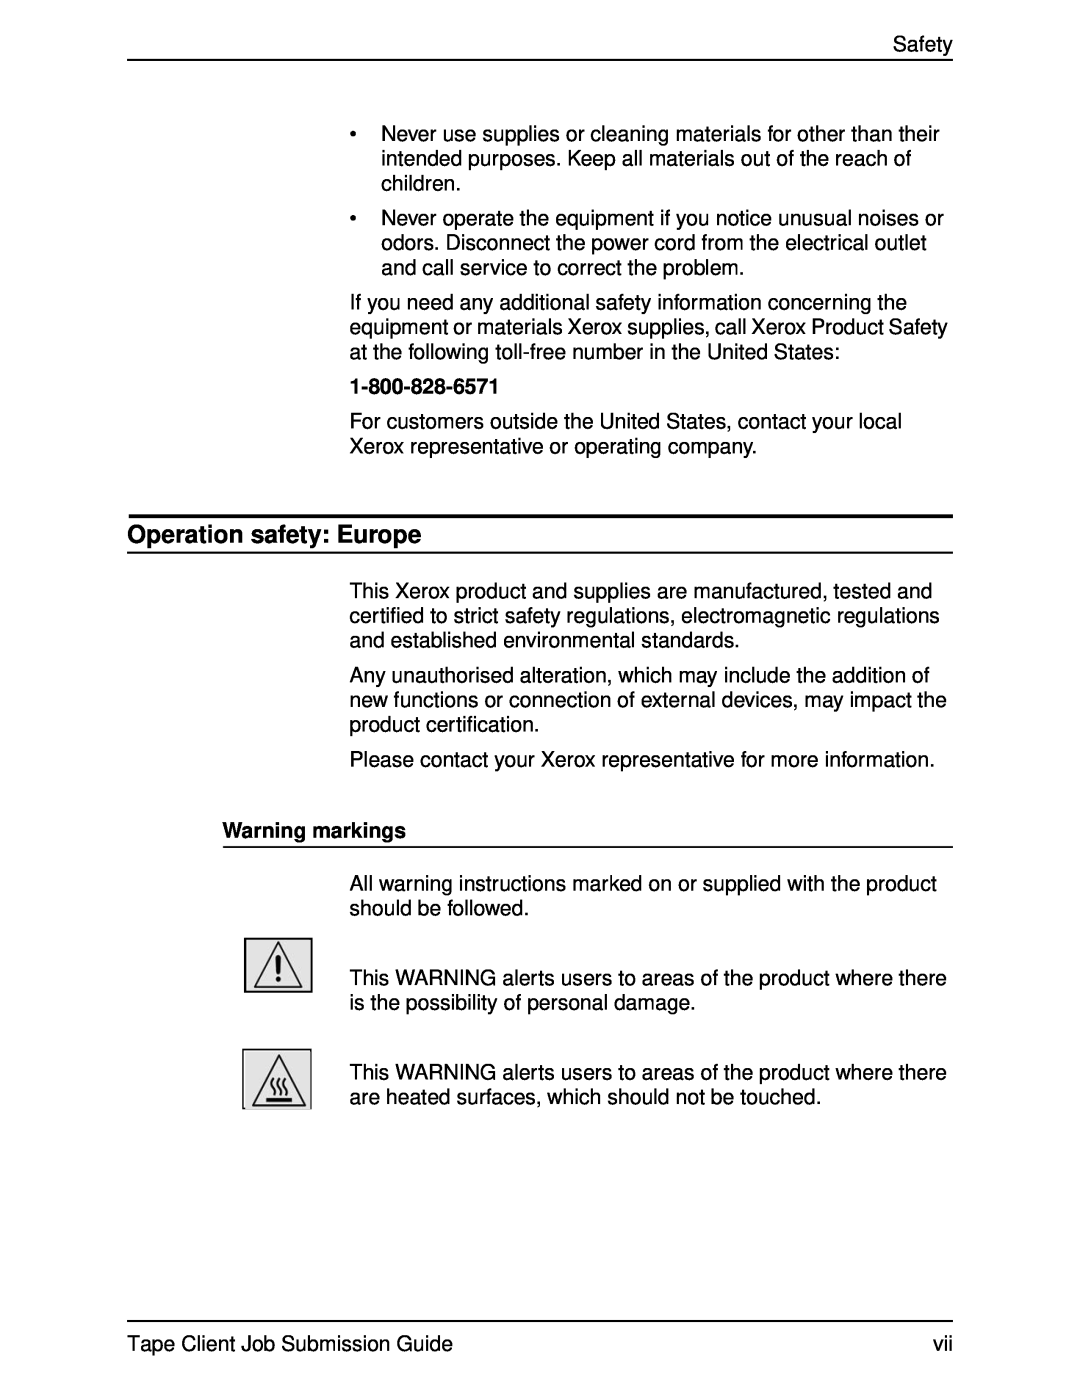 Xerox 701P21110 manual Operation safety: Europe, 1-800-828-6571, Warning markings 